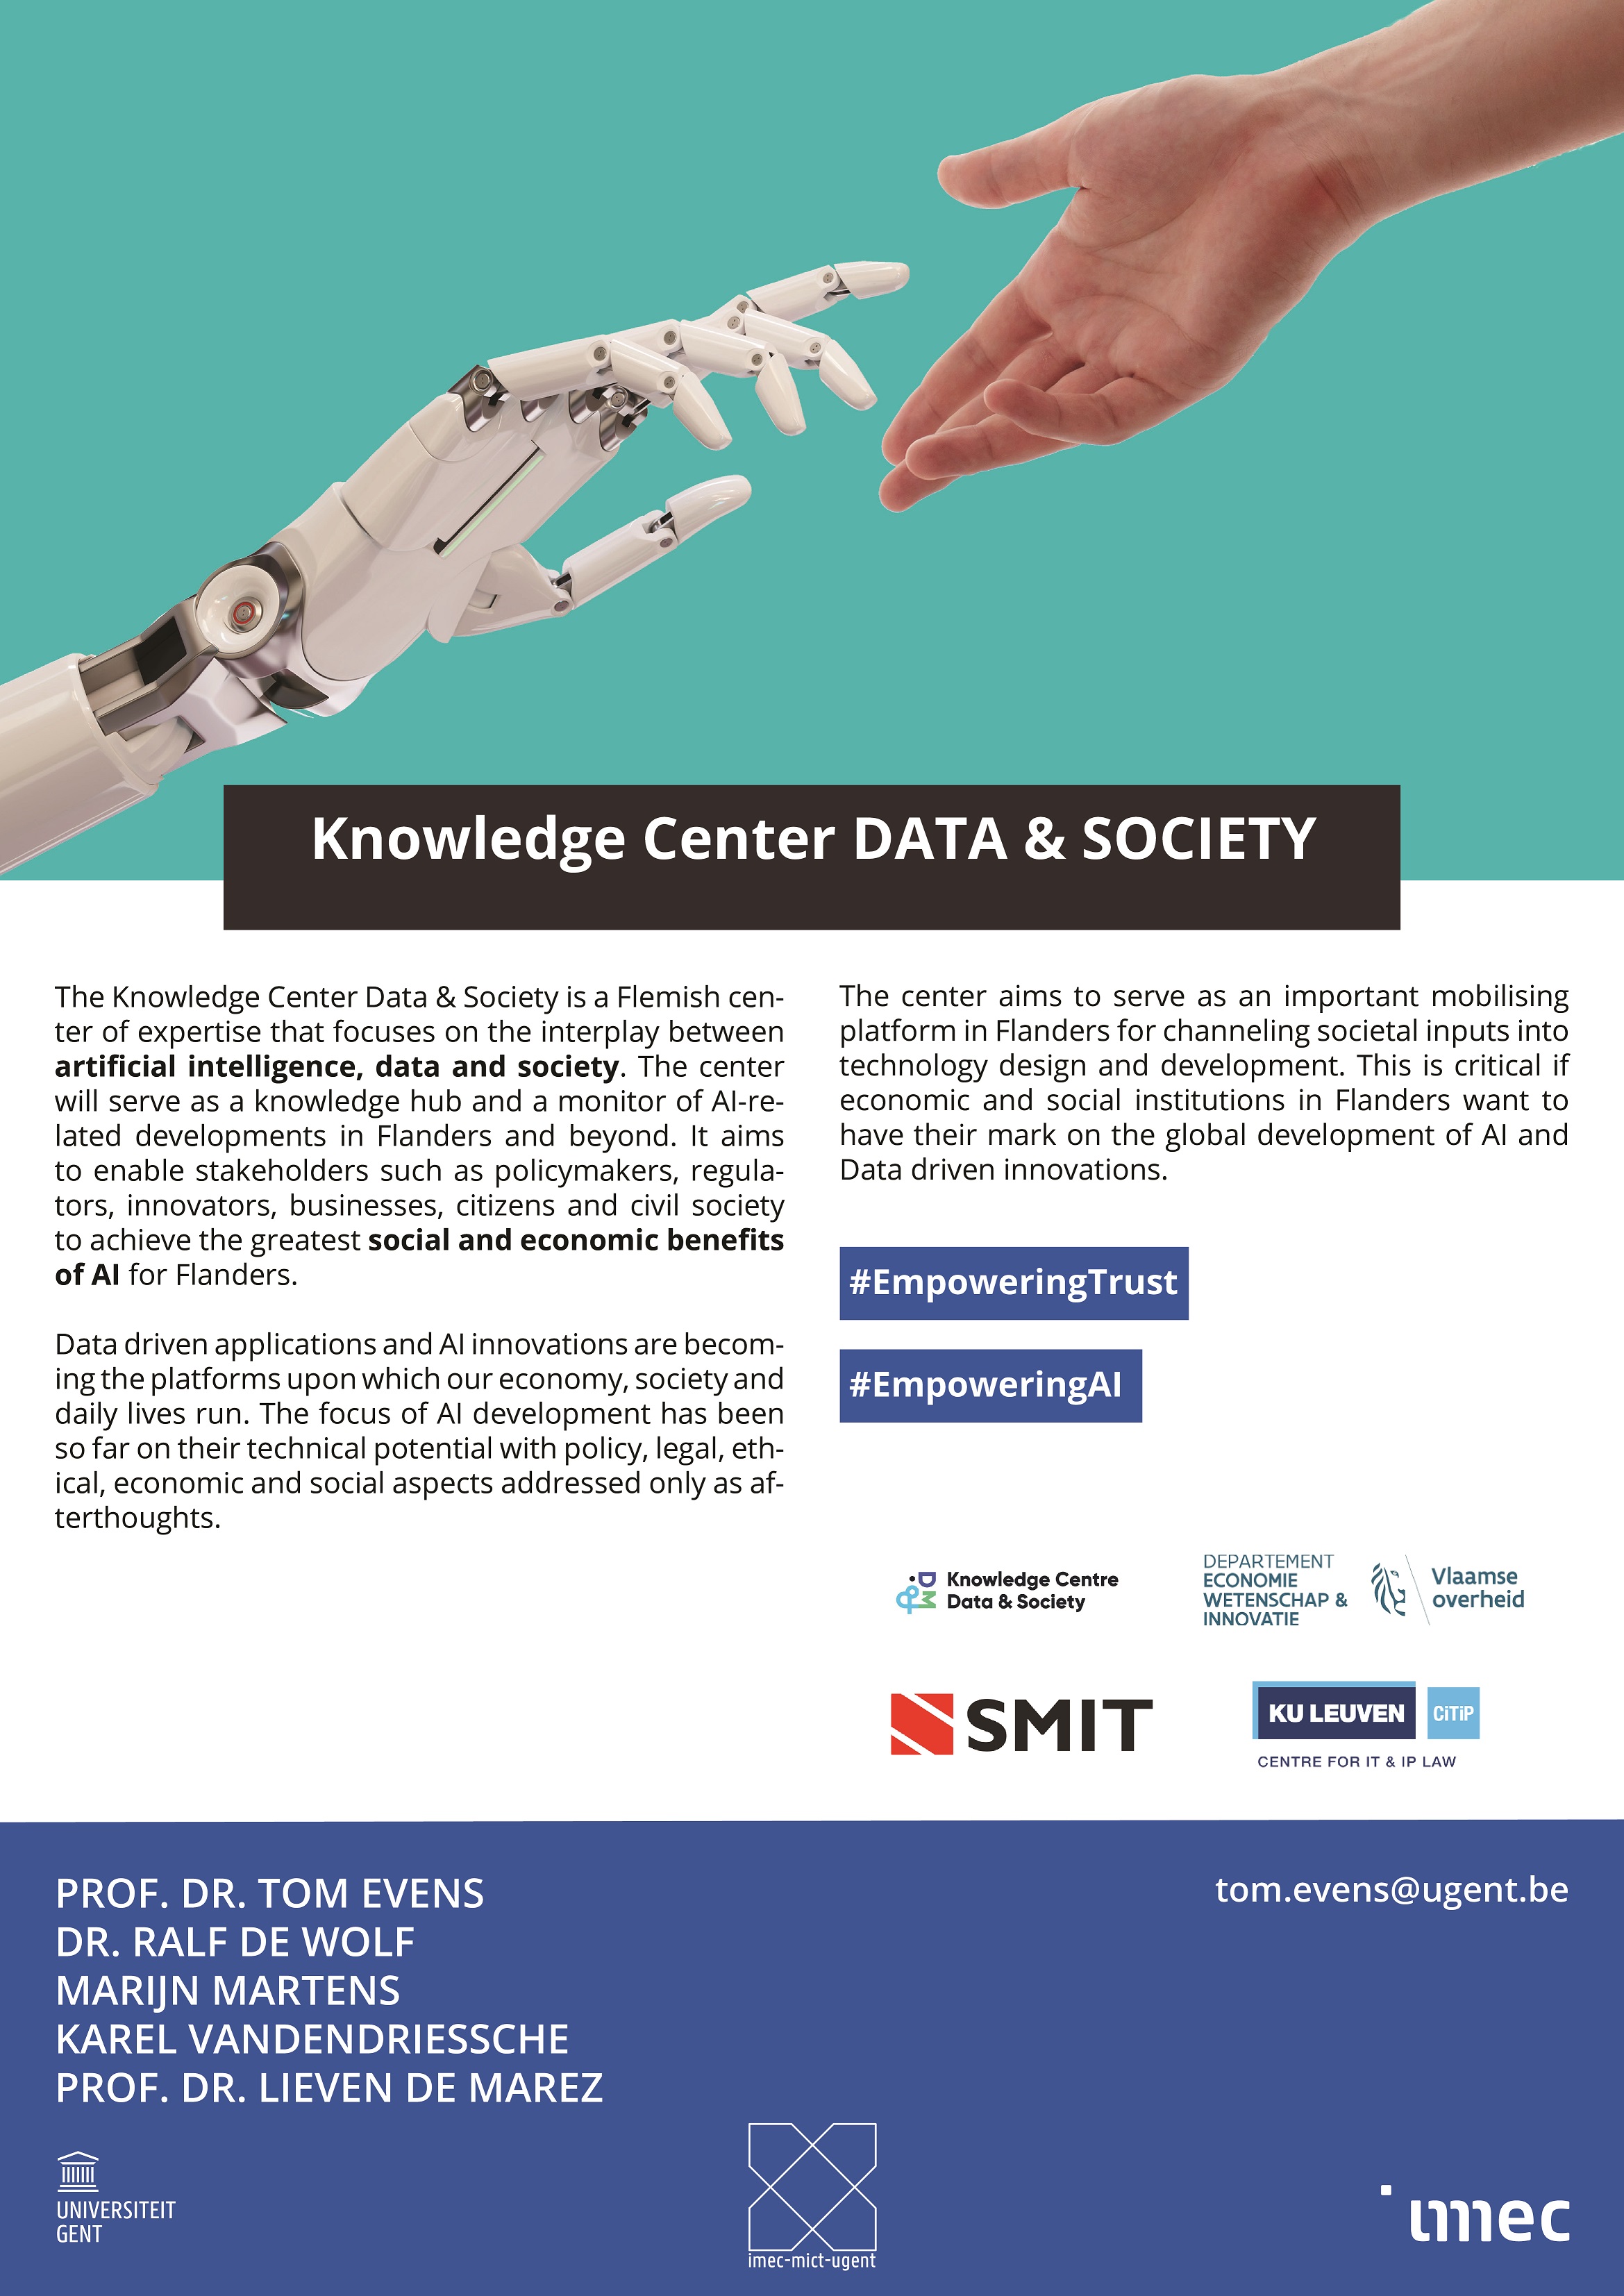 Knowledge Center Data & Society